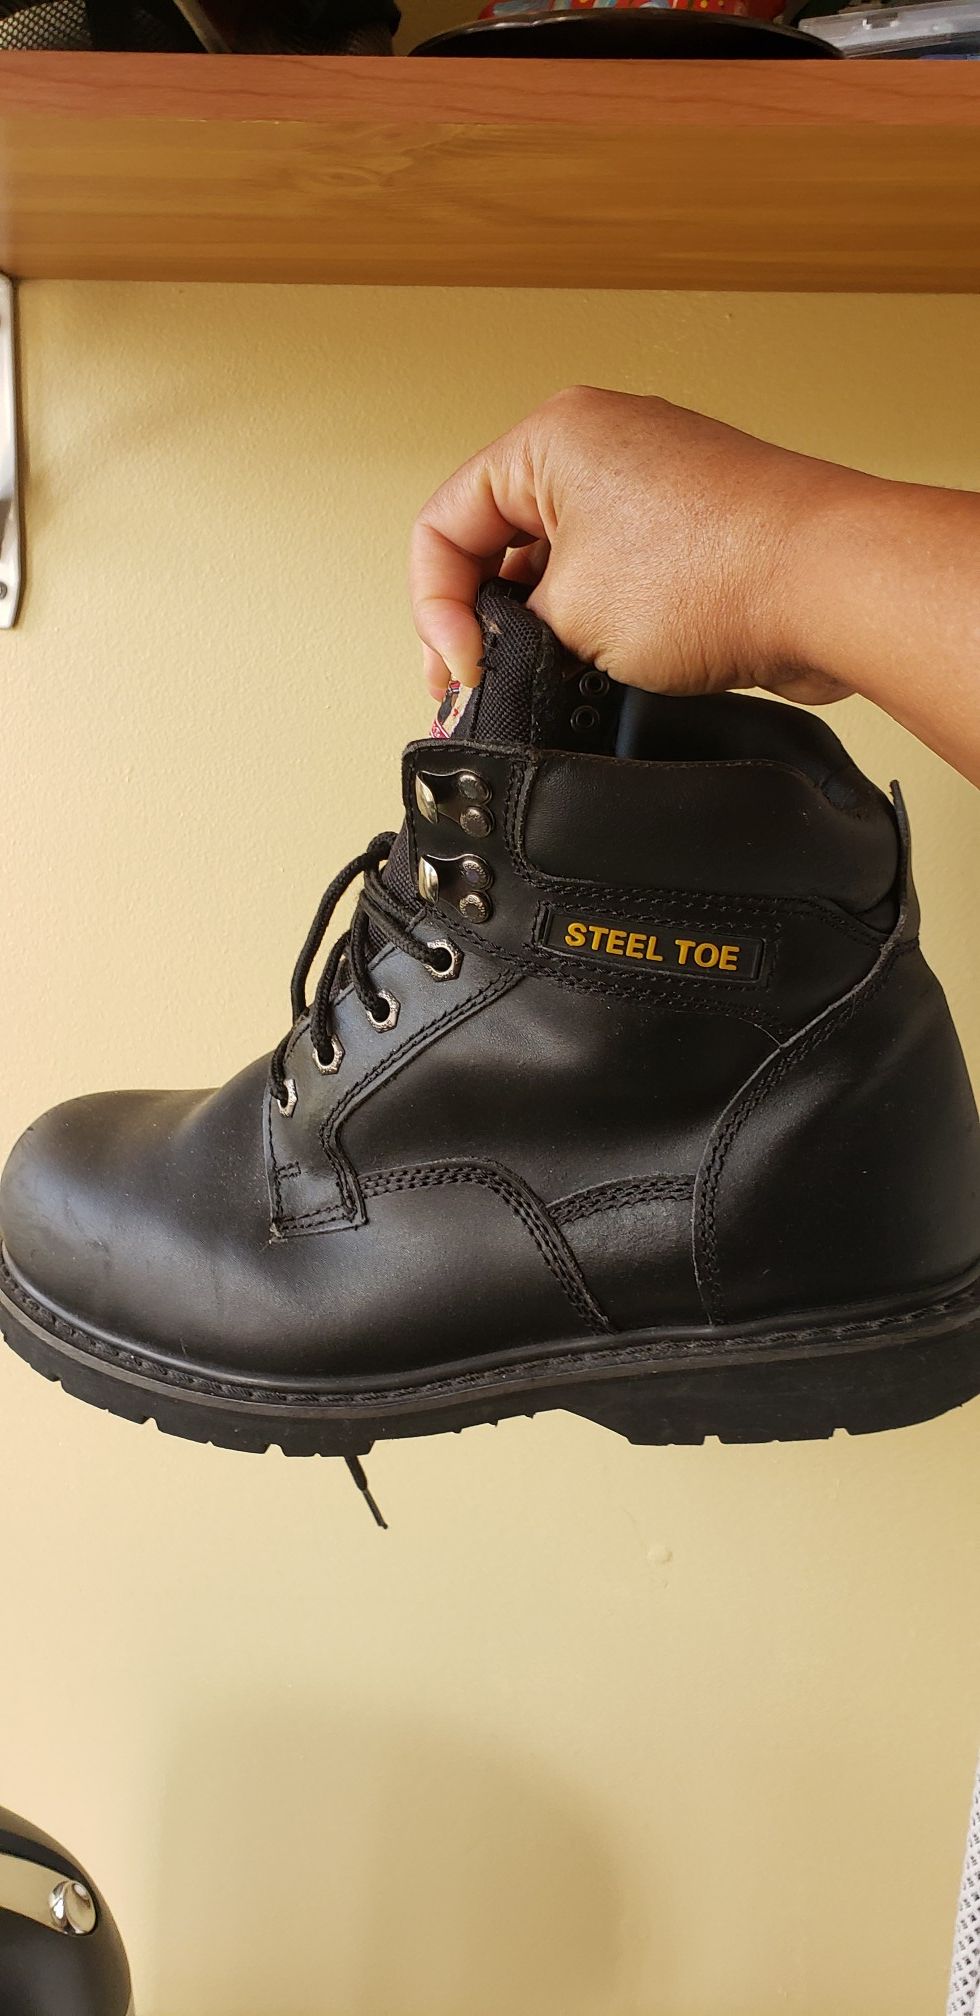 Steel toe boots